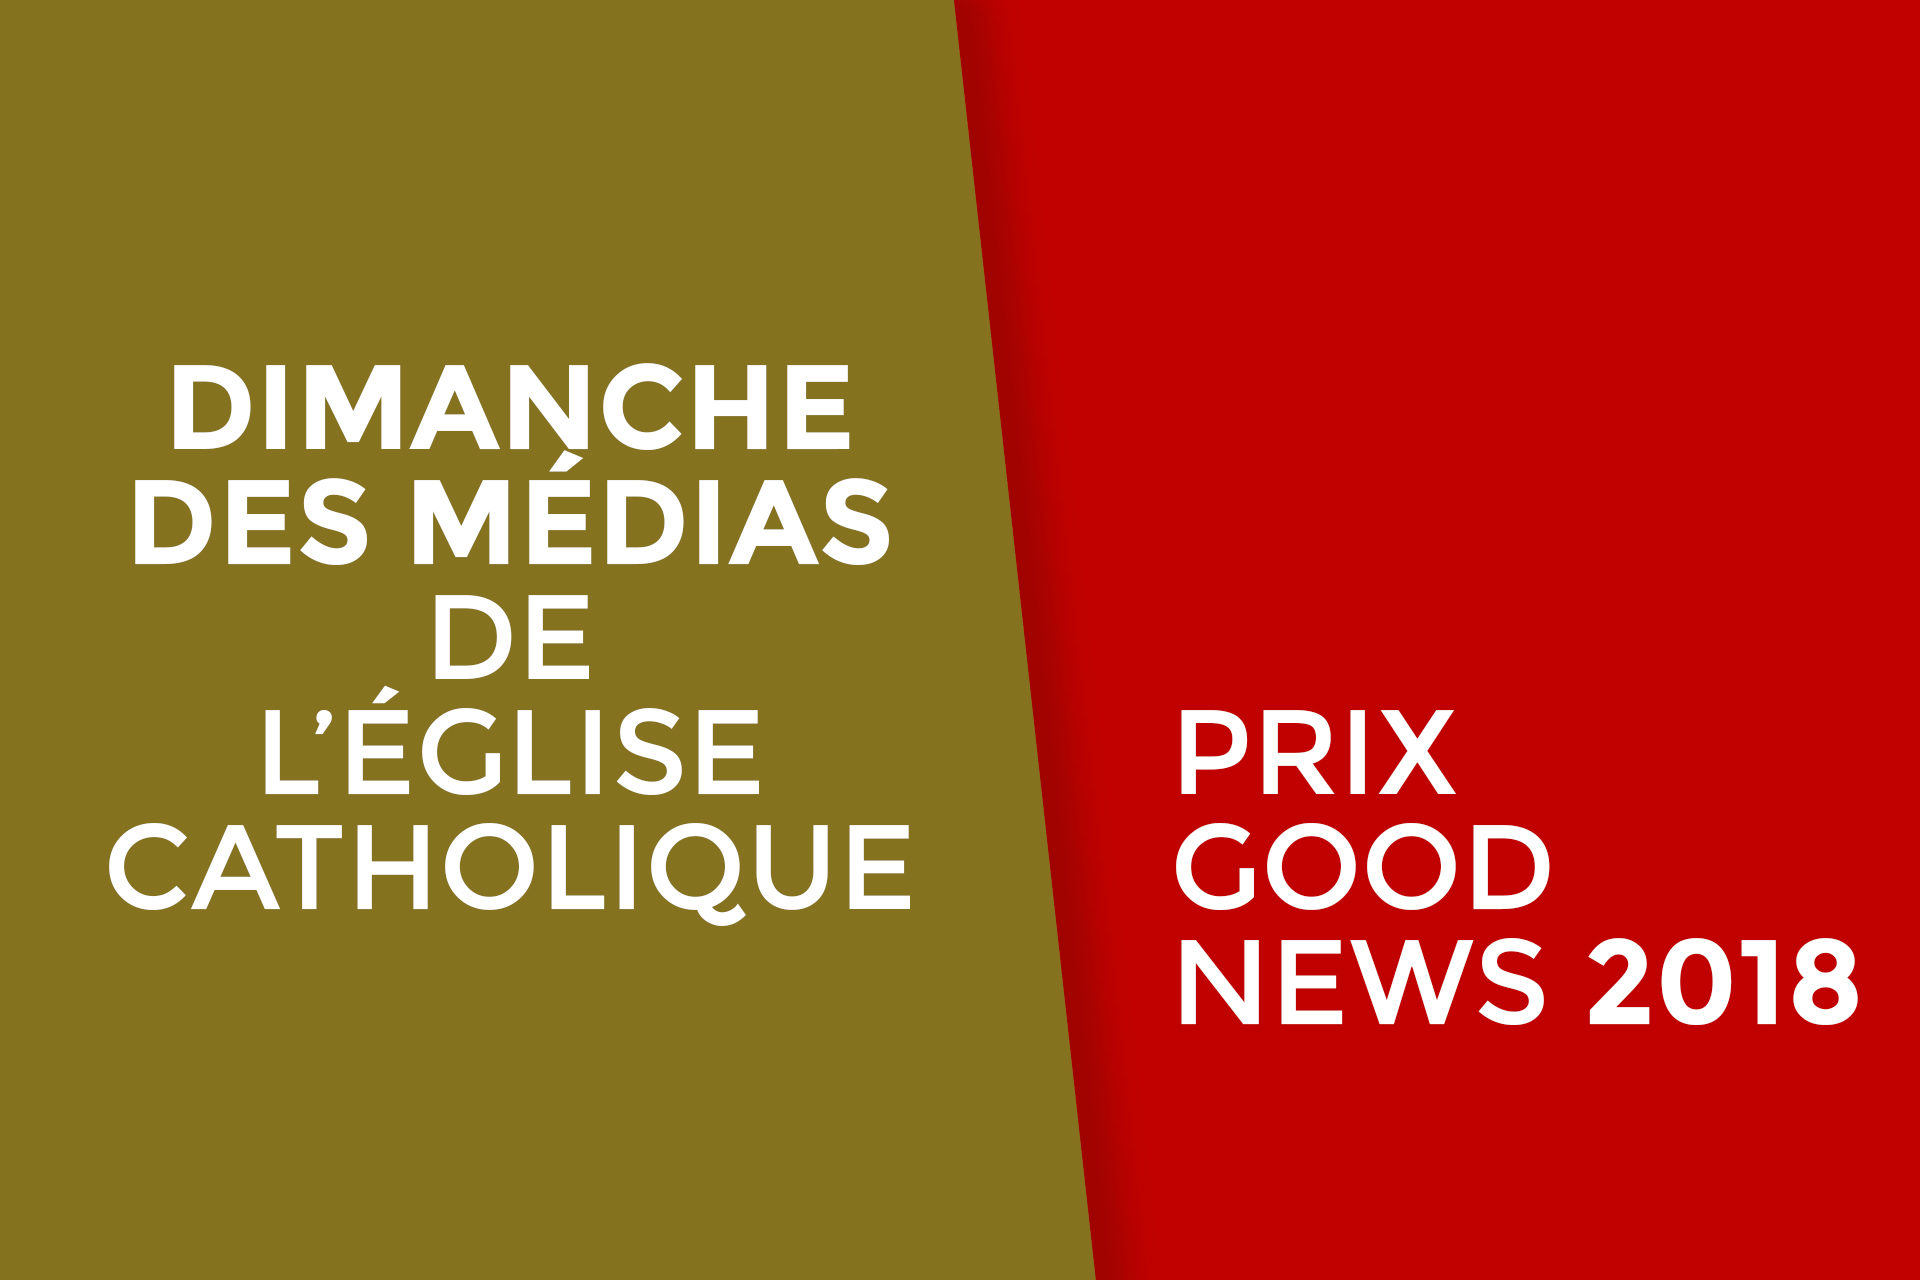 Prix Good news 2018
